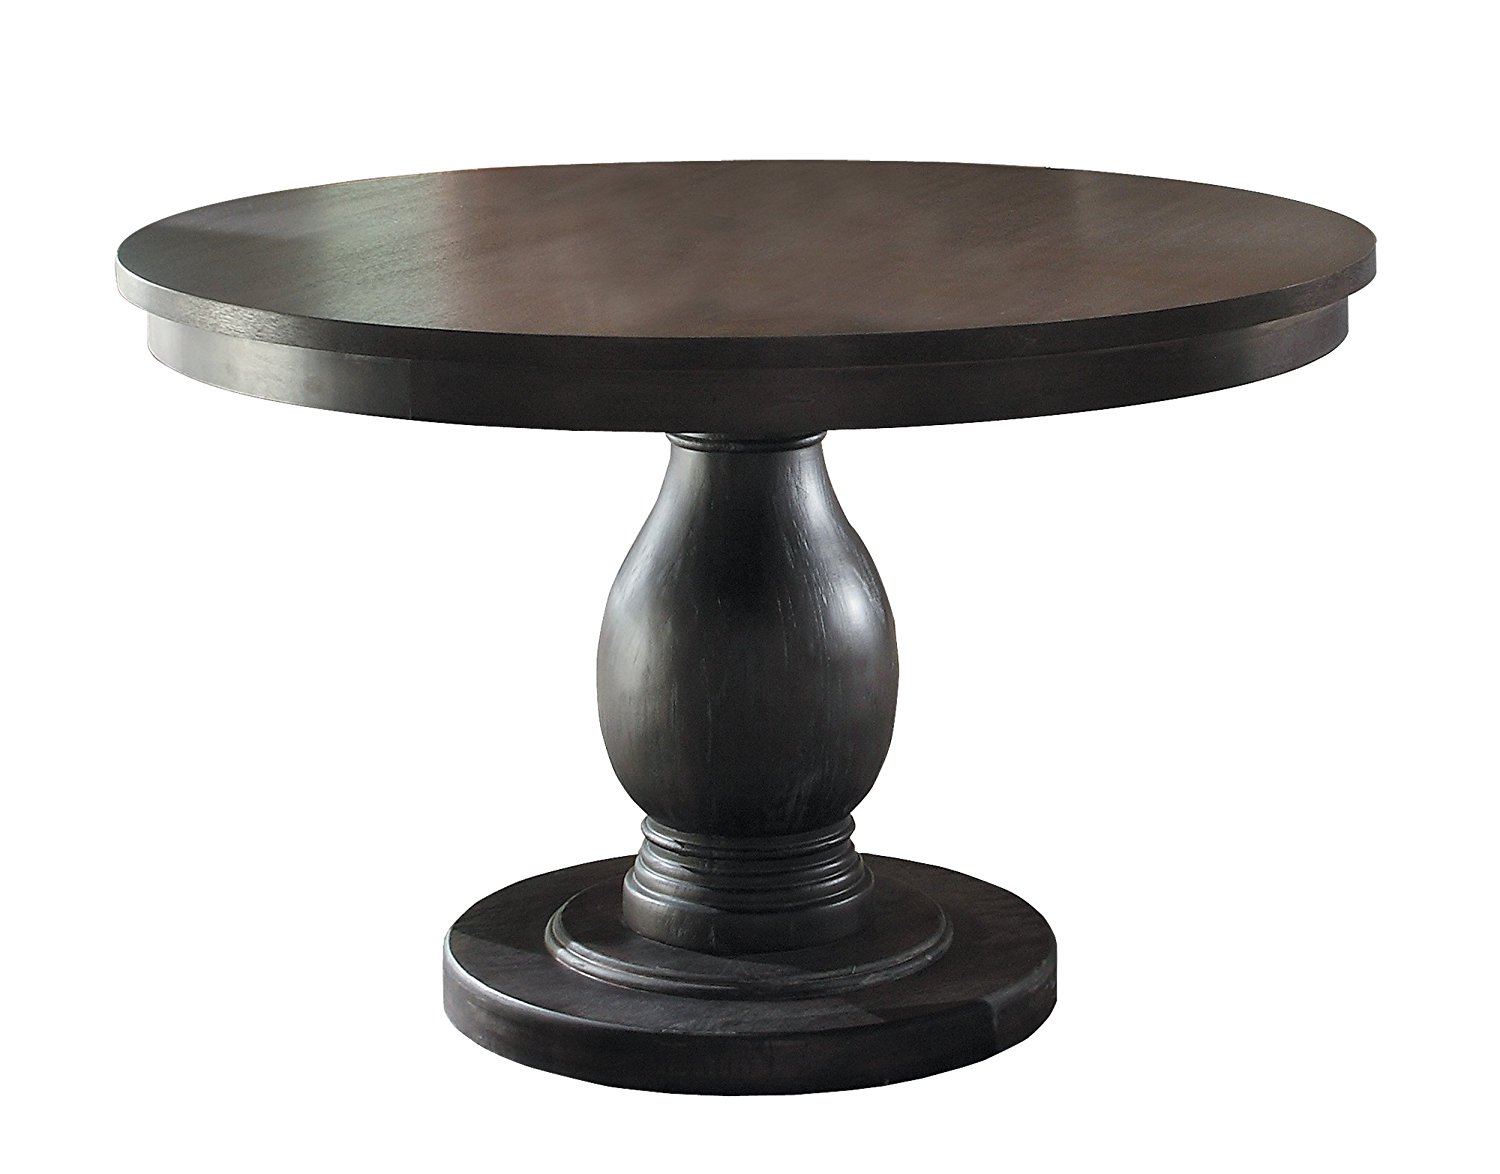 round pedestal dining table amazon.com: 2466-48 style round pedestal table by homelegance: kitchen u0026  dining QRSPBMF